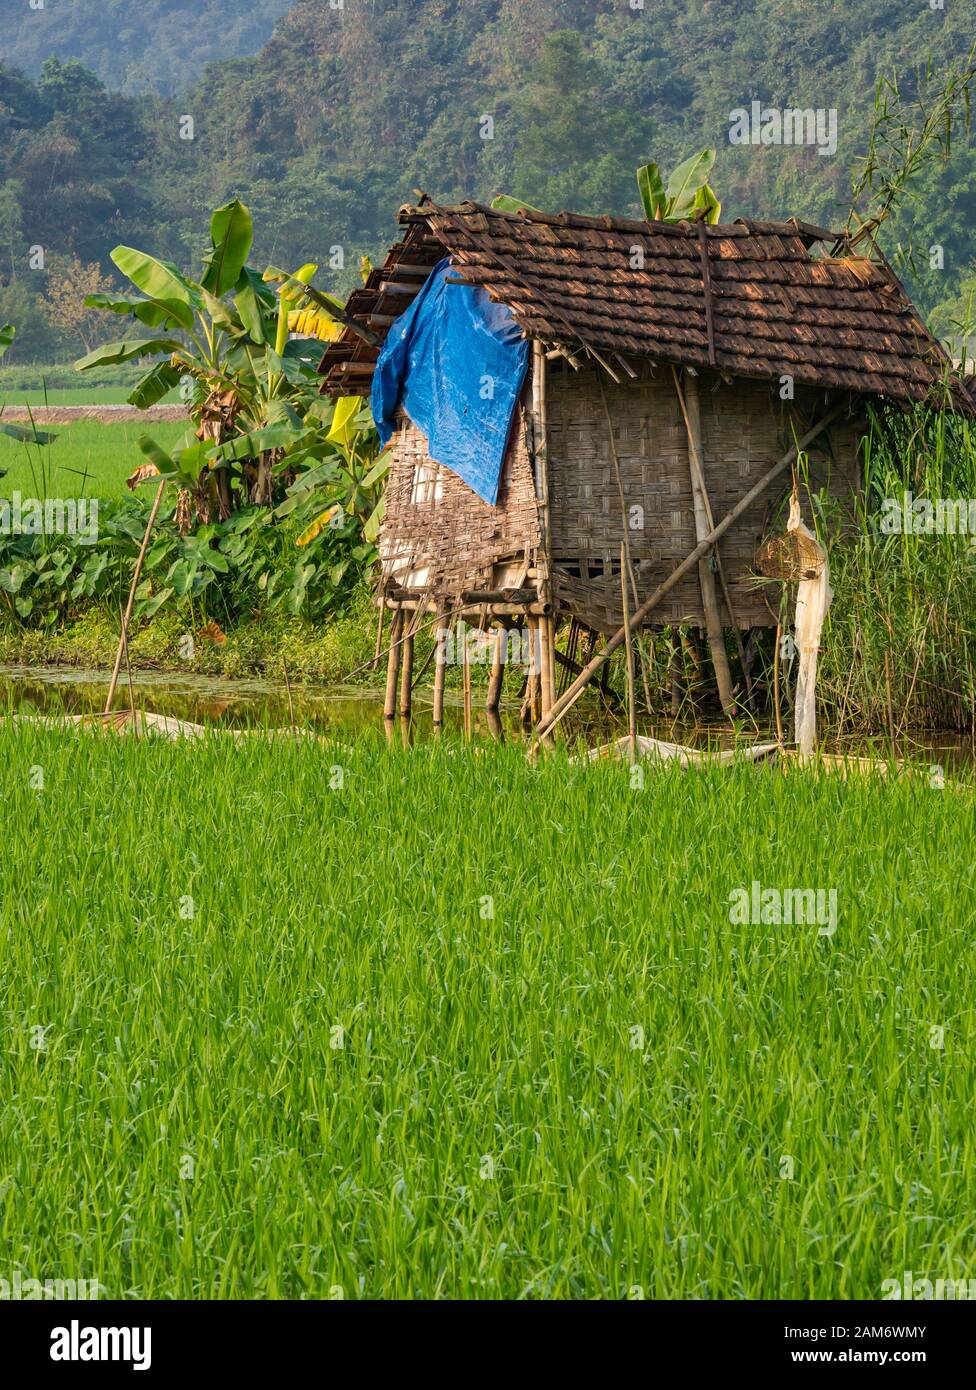 Traditional house on stilts on edge of rice paddy field, Tam Coc, Ninh Binh, Vietnam, Asia Stock Photo